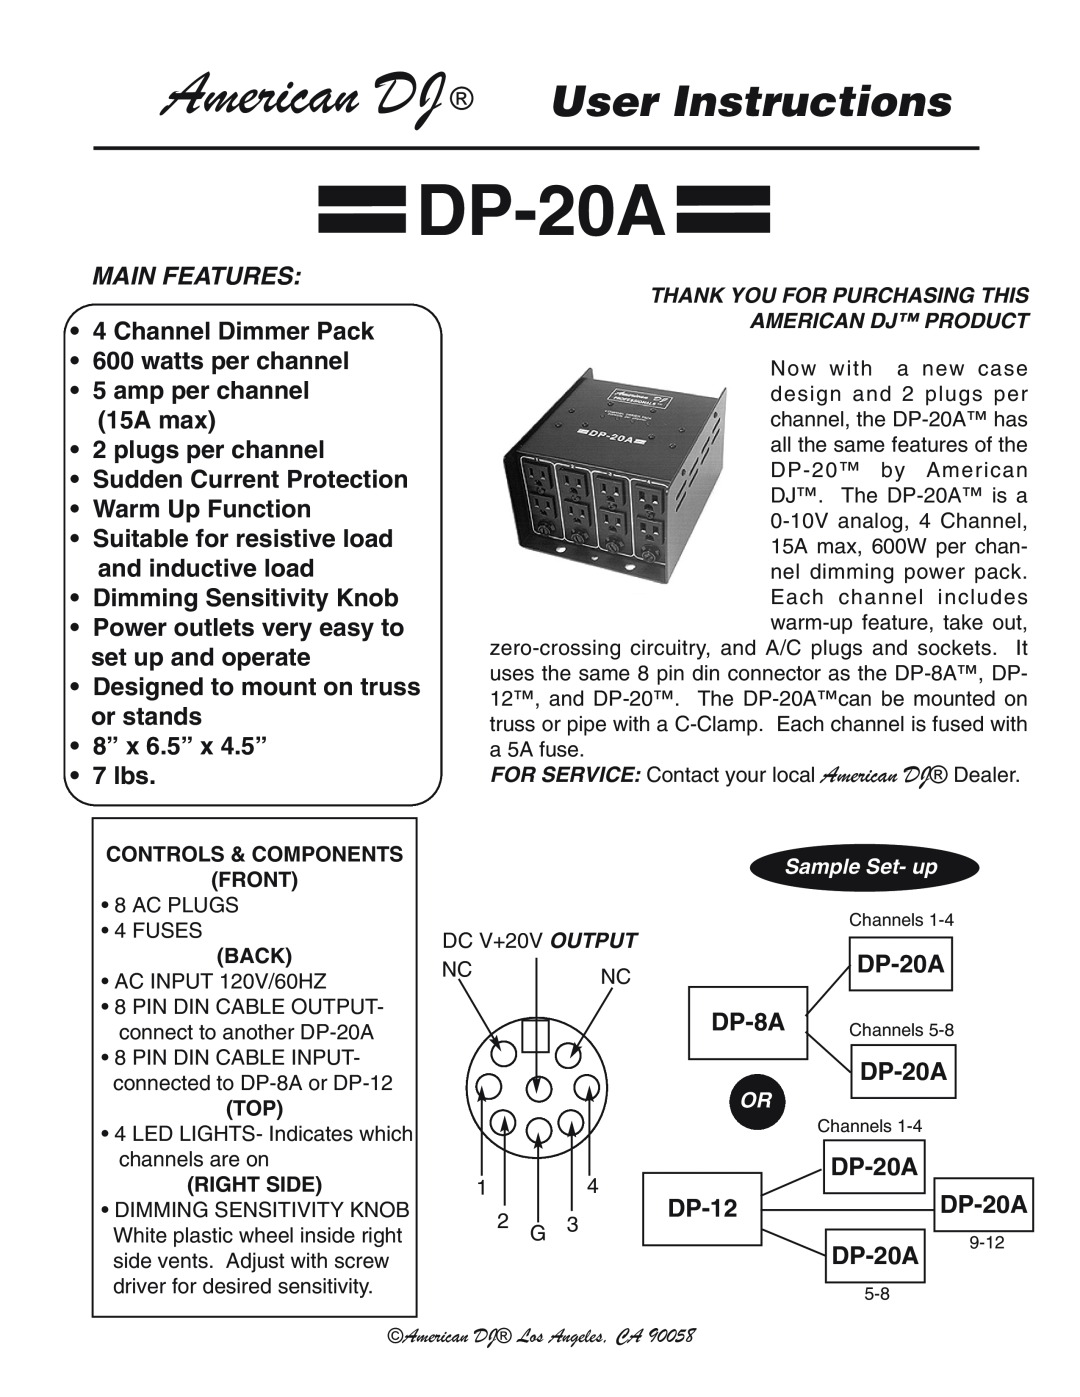 American DJ DP-20A manual American DJ User Instructions, Main Features 